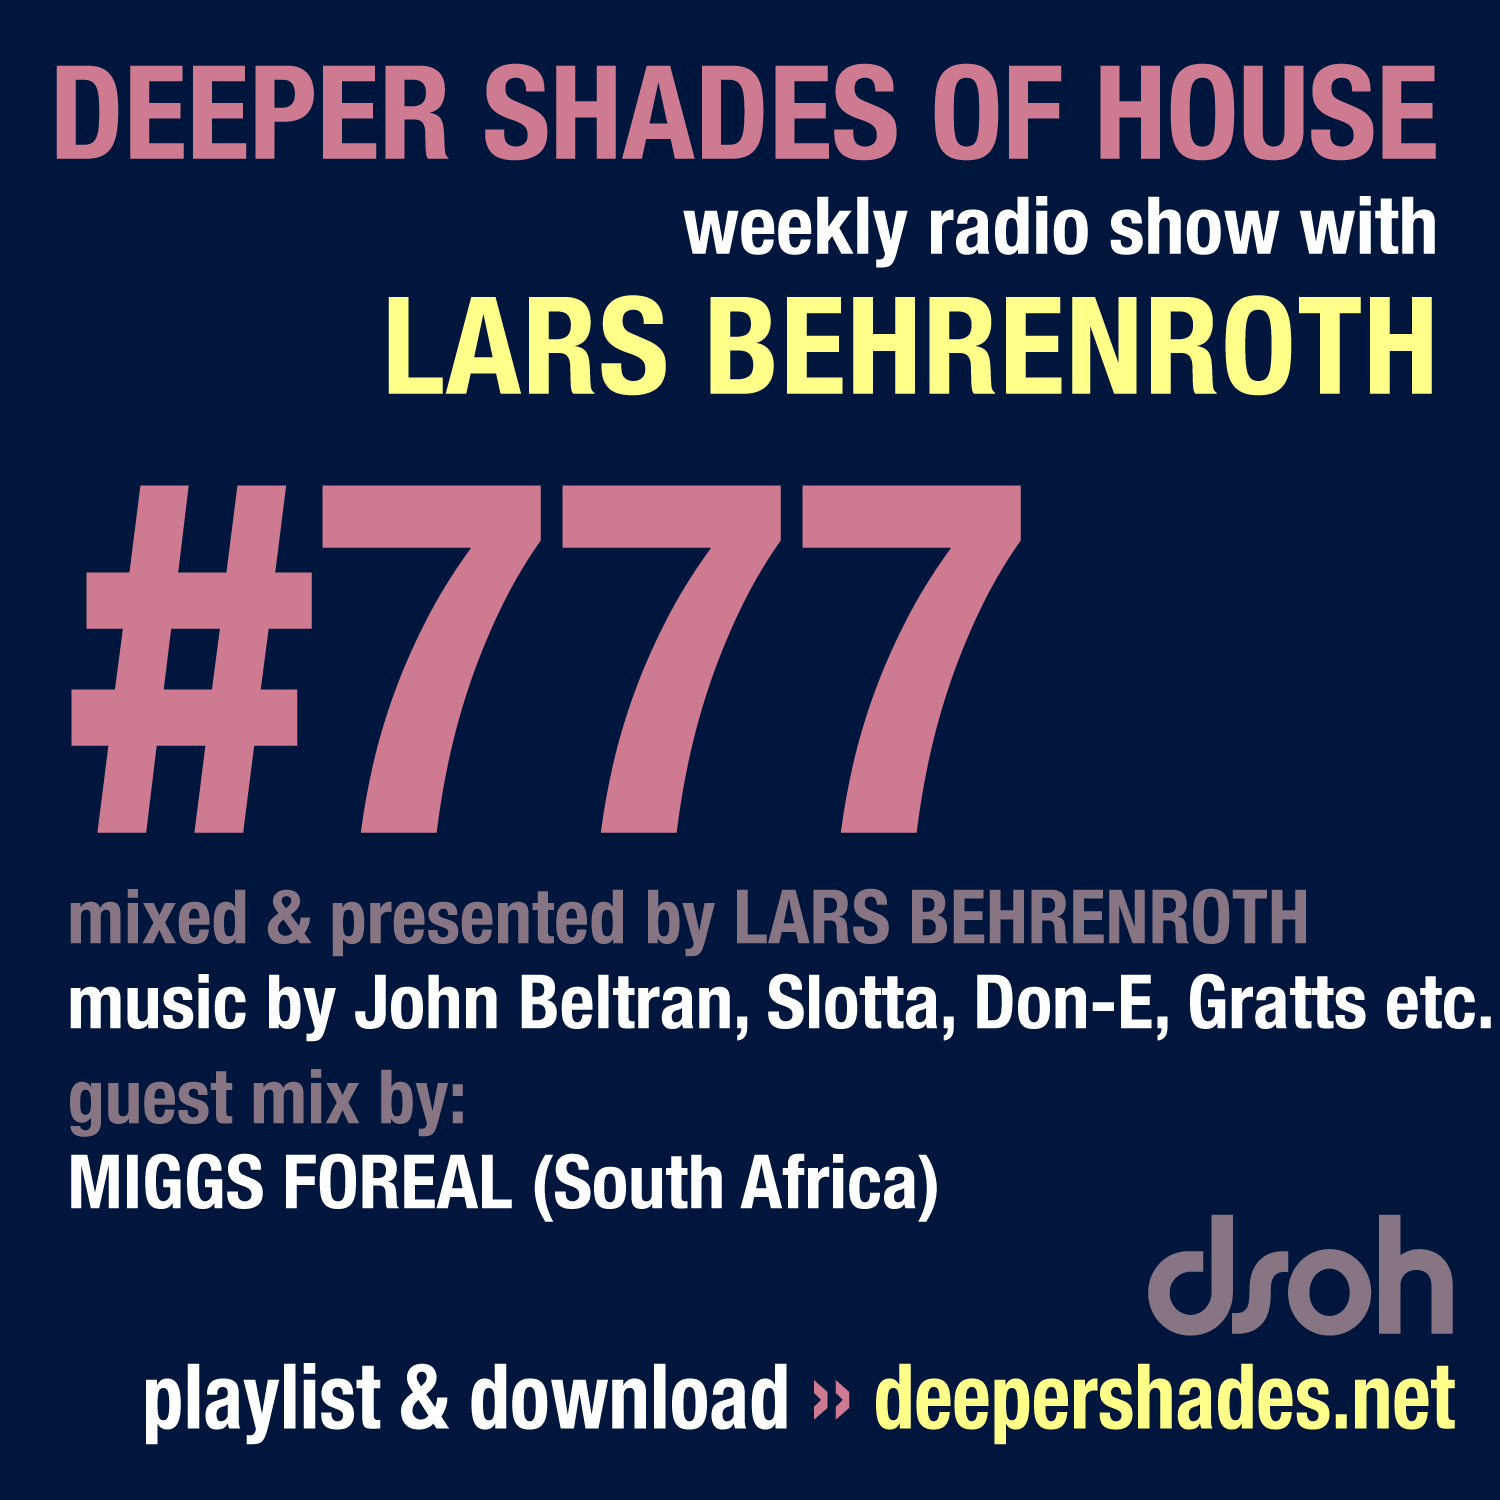 Deep House Radio Show Deeper Shades Of House 777